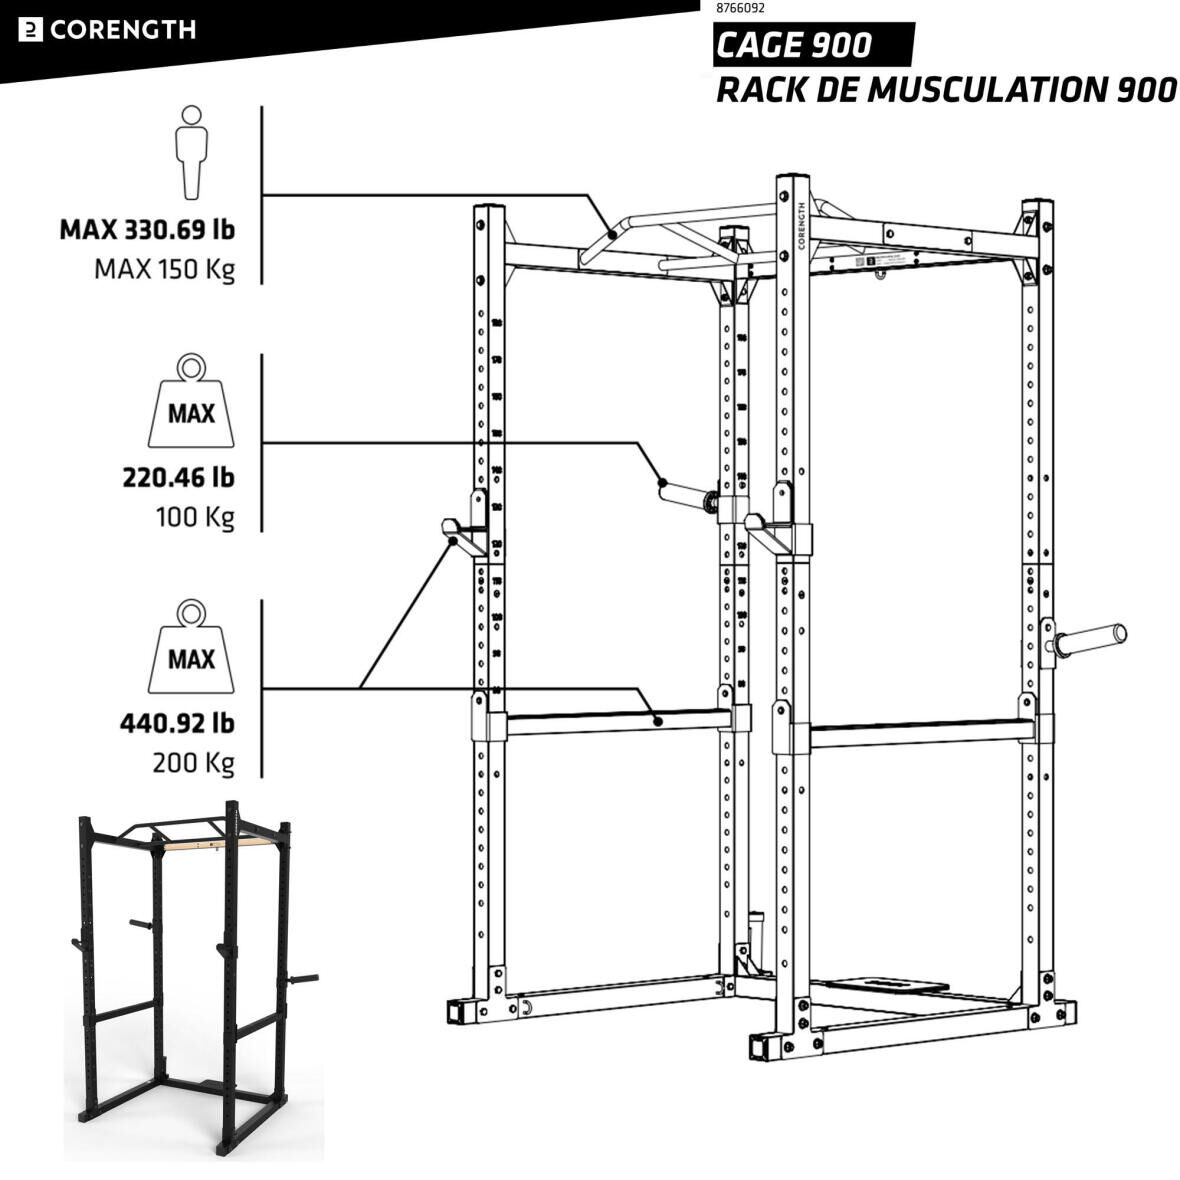 Rack musculation cage 900 2023 corength notice réparation